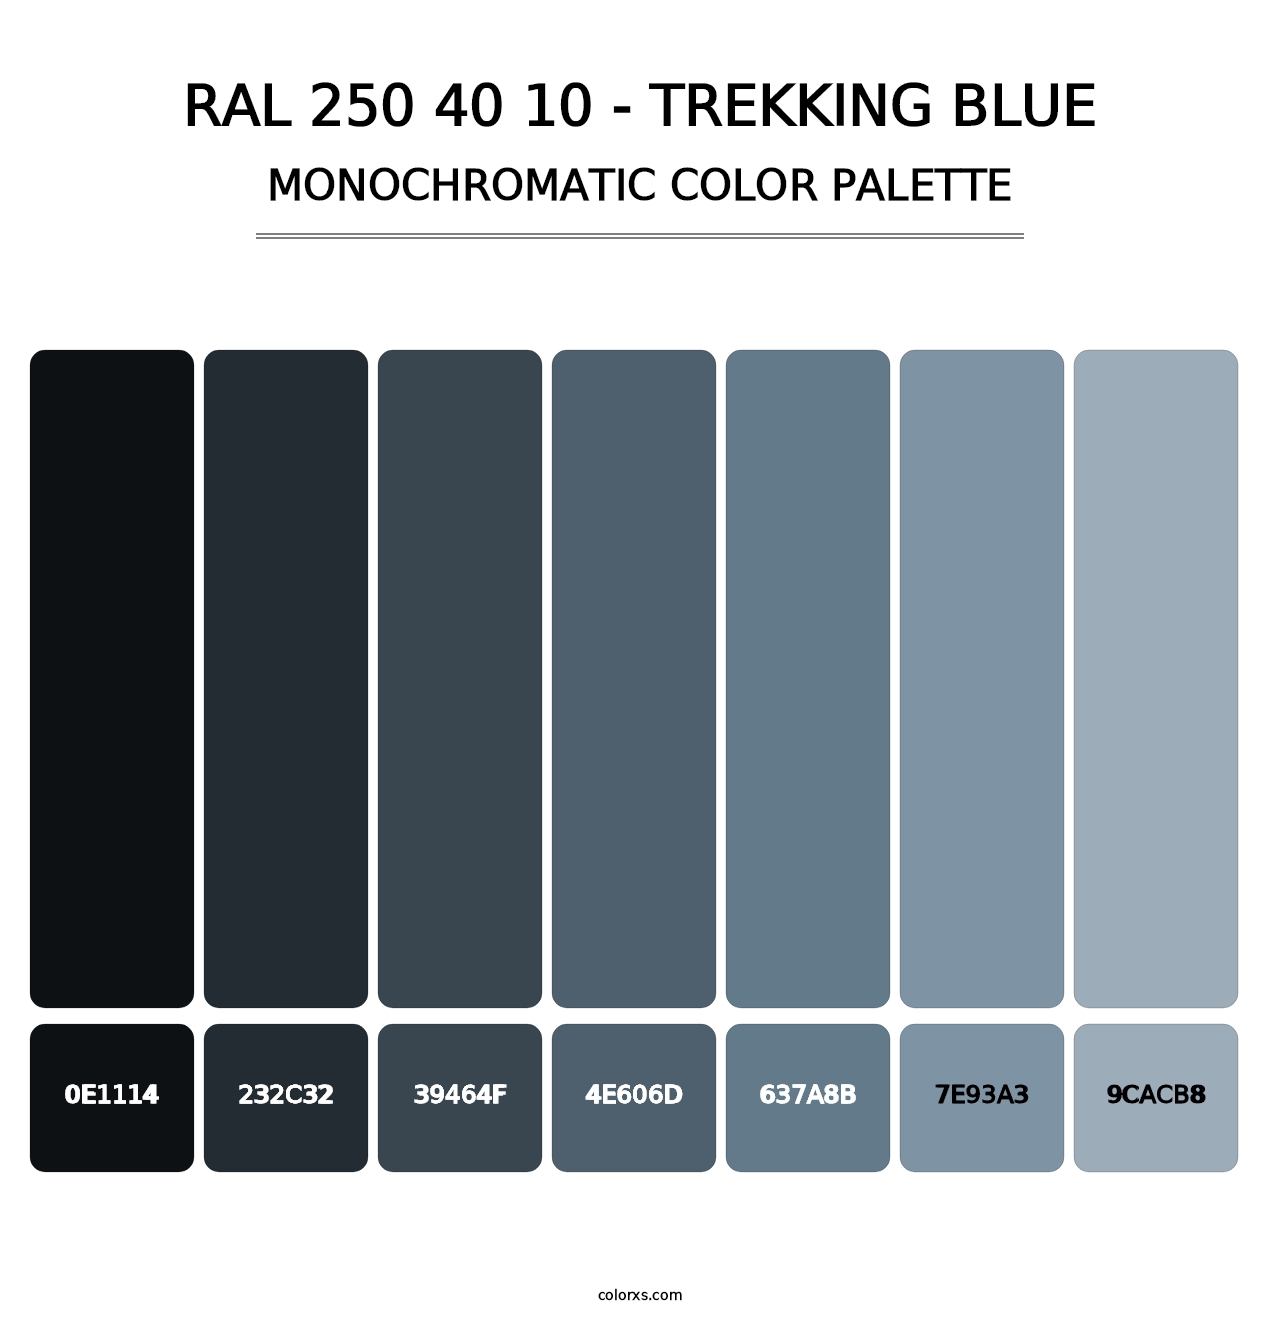 RAL 250 40 10 - Trekking Blue - Monochromatic Color Palette